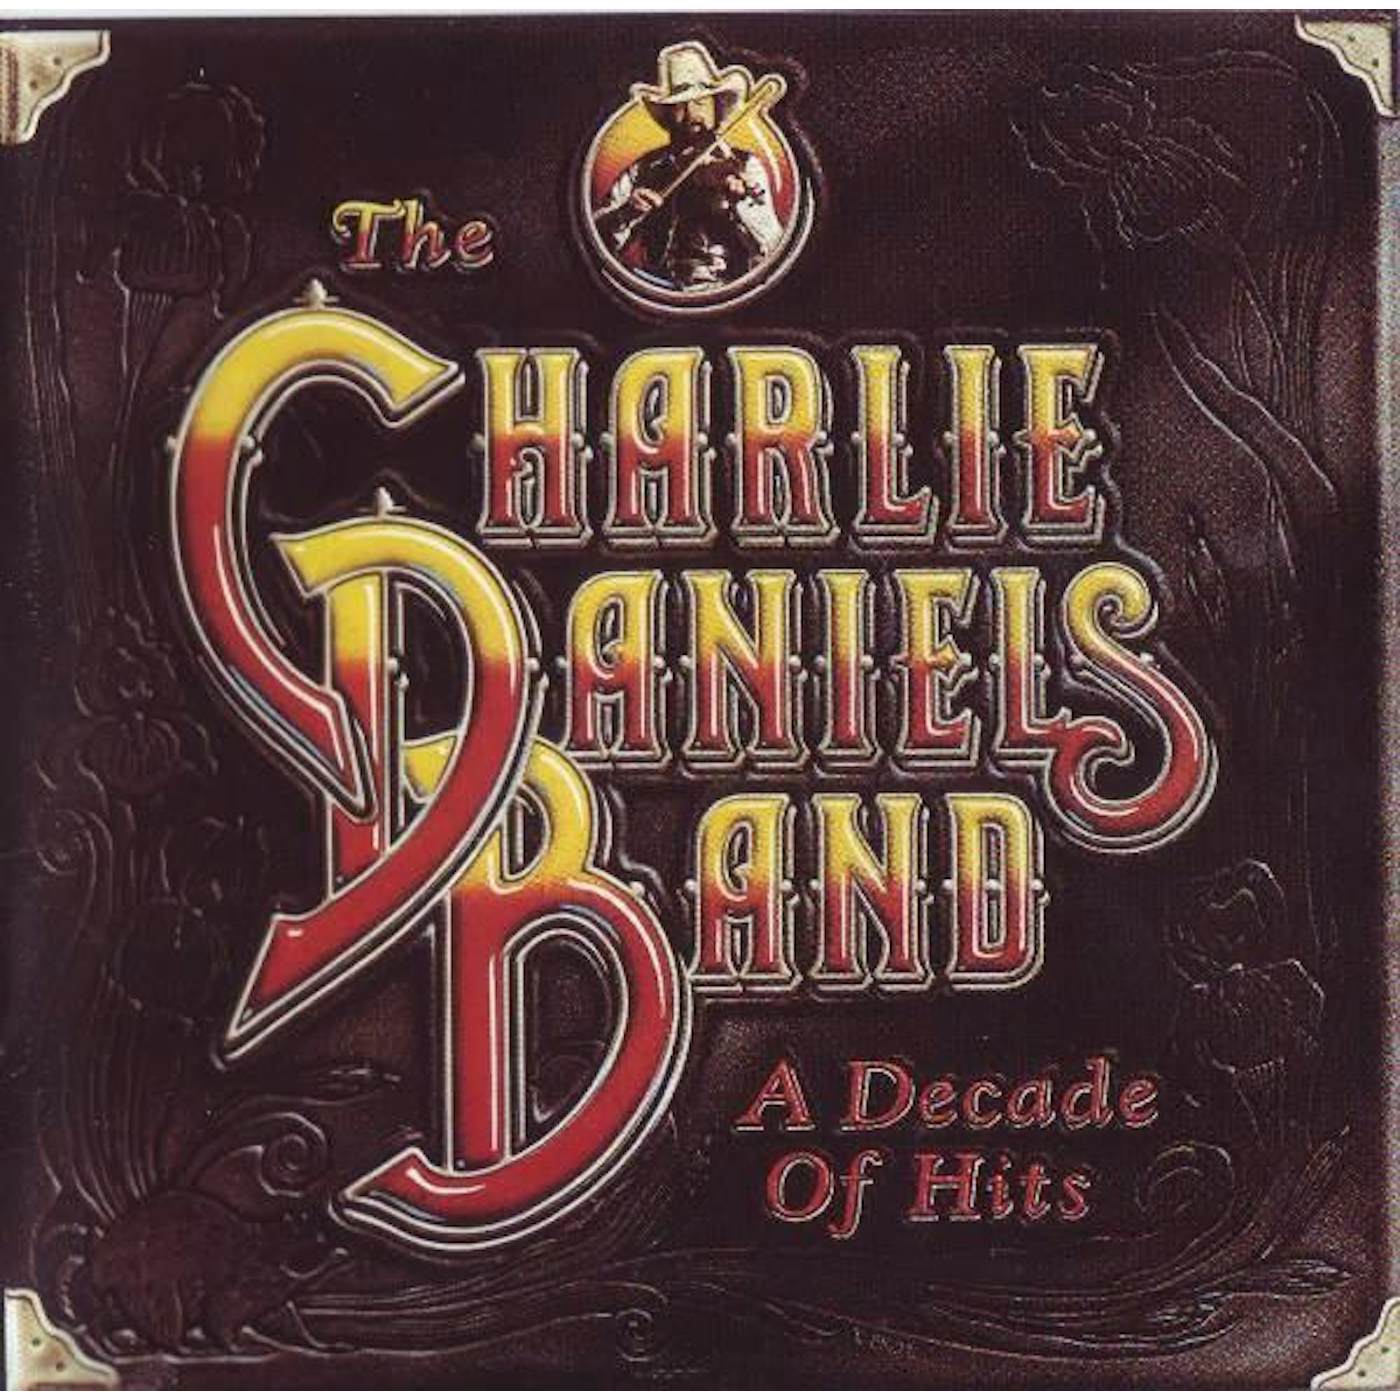 Charlie Daniels DECADE OF HITS CD